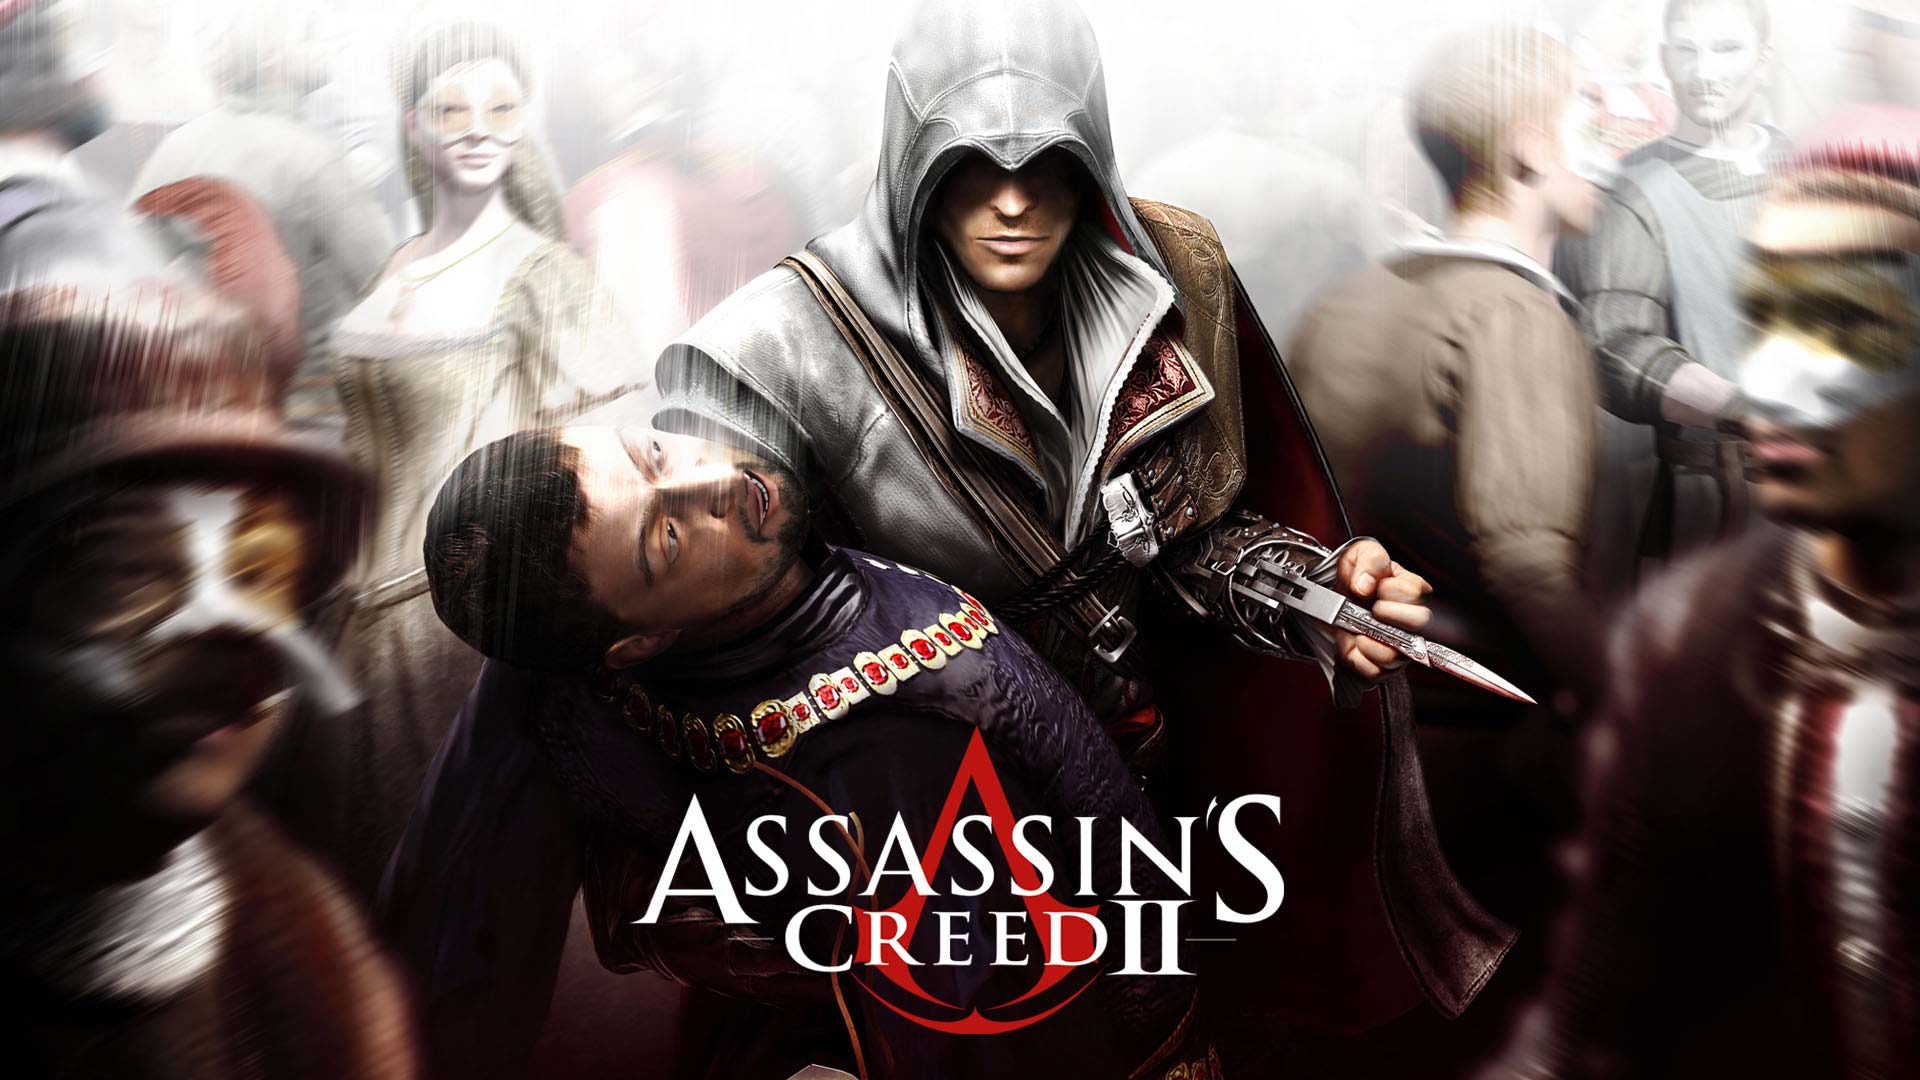 Ever Increasing Generosity This Week By Making Assassin S Creed Ii